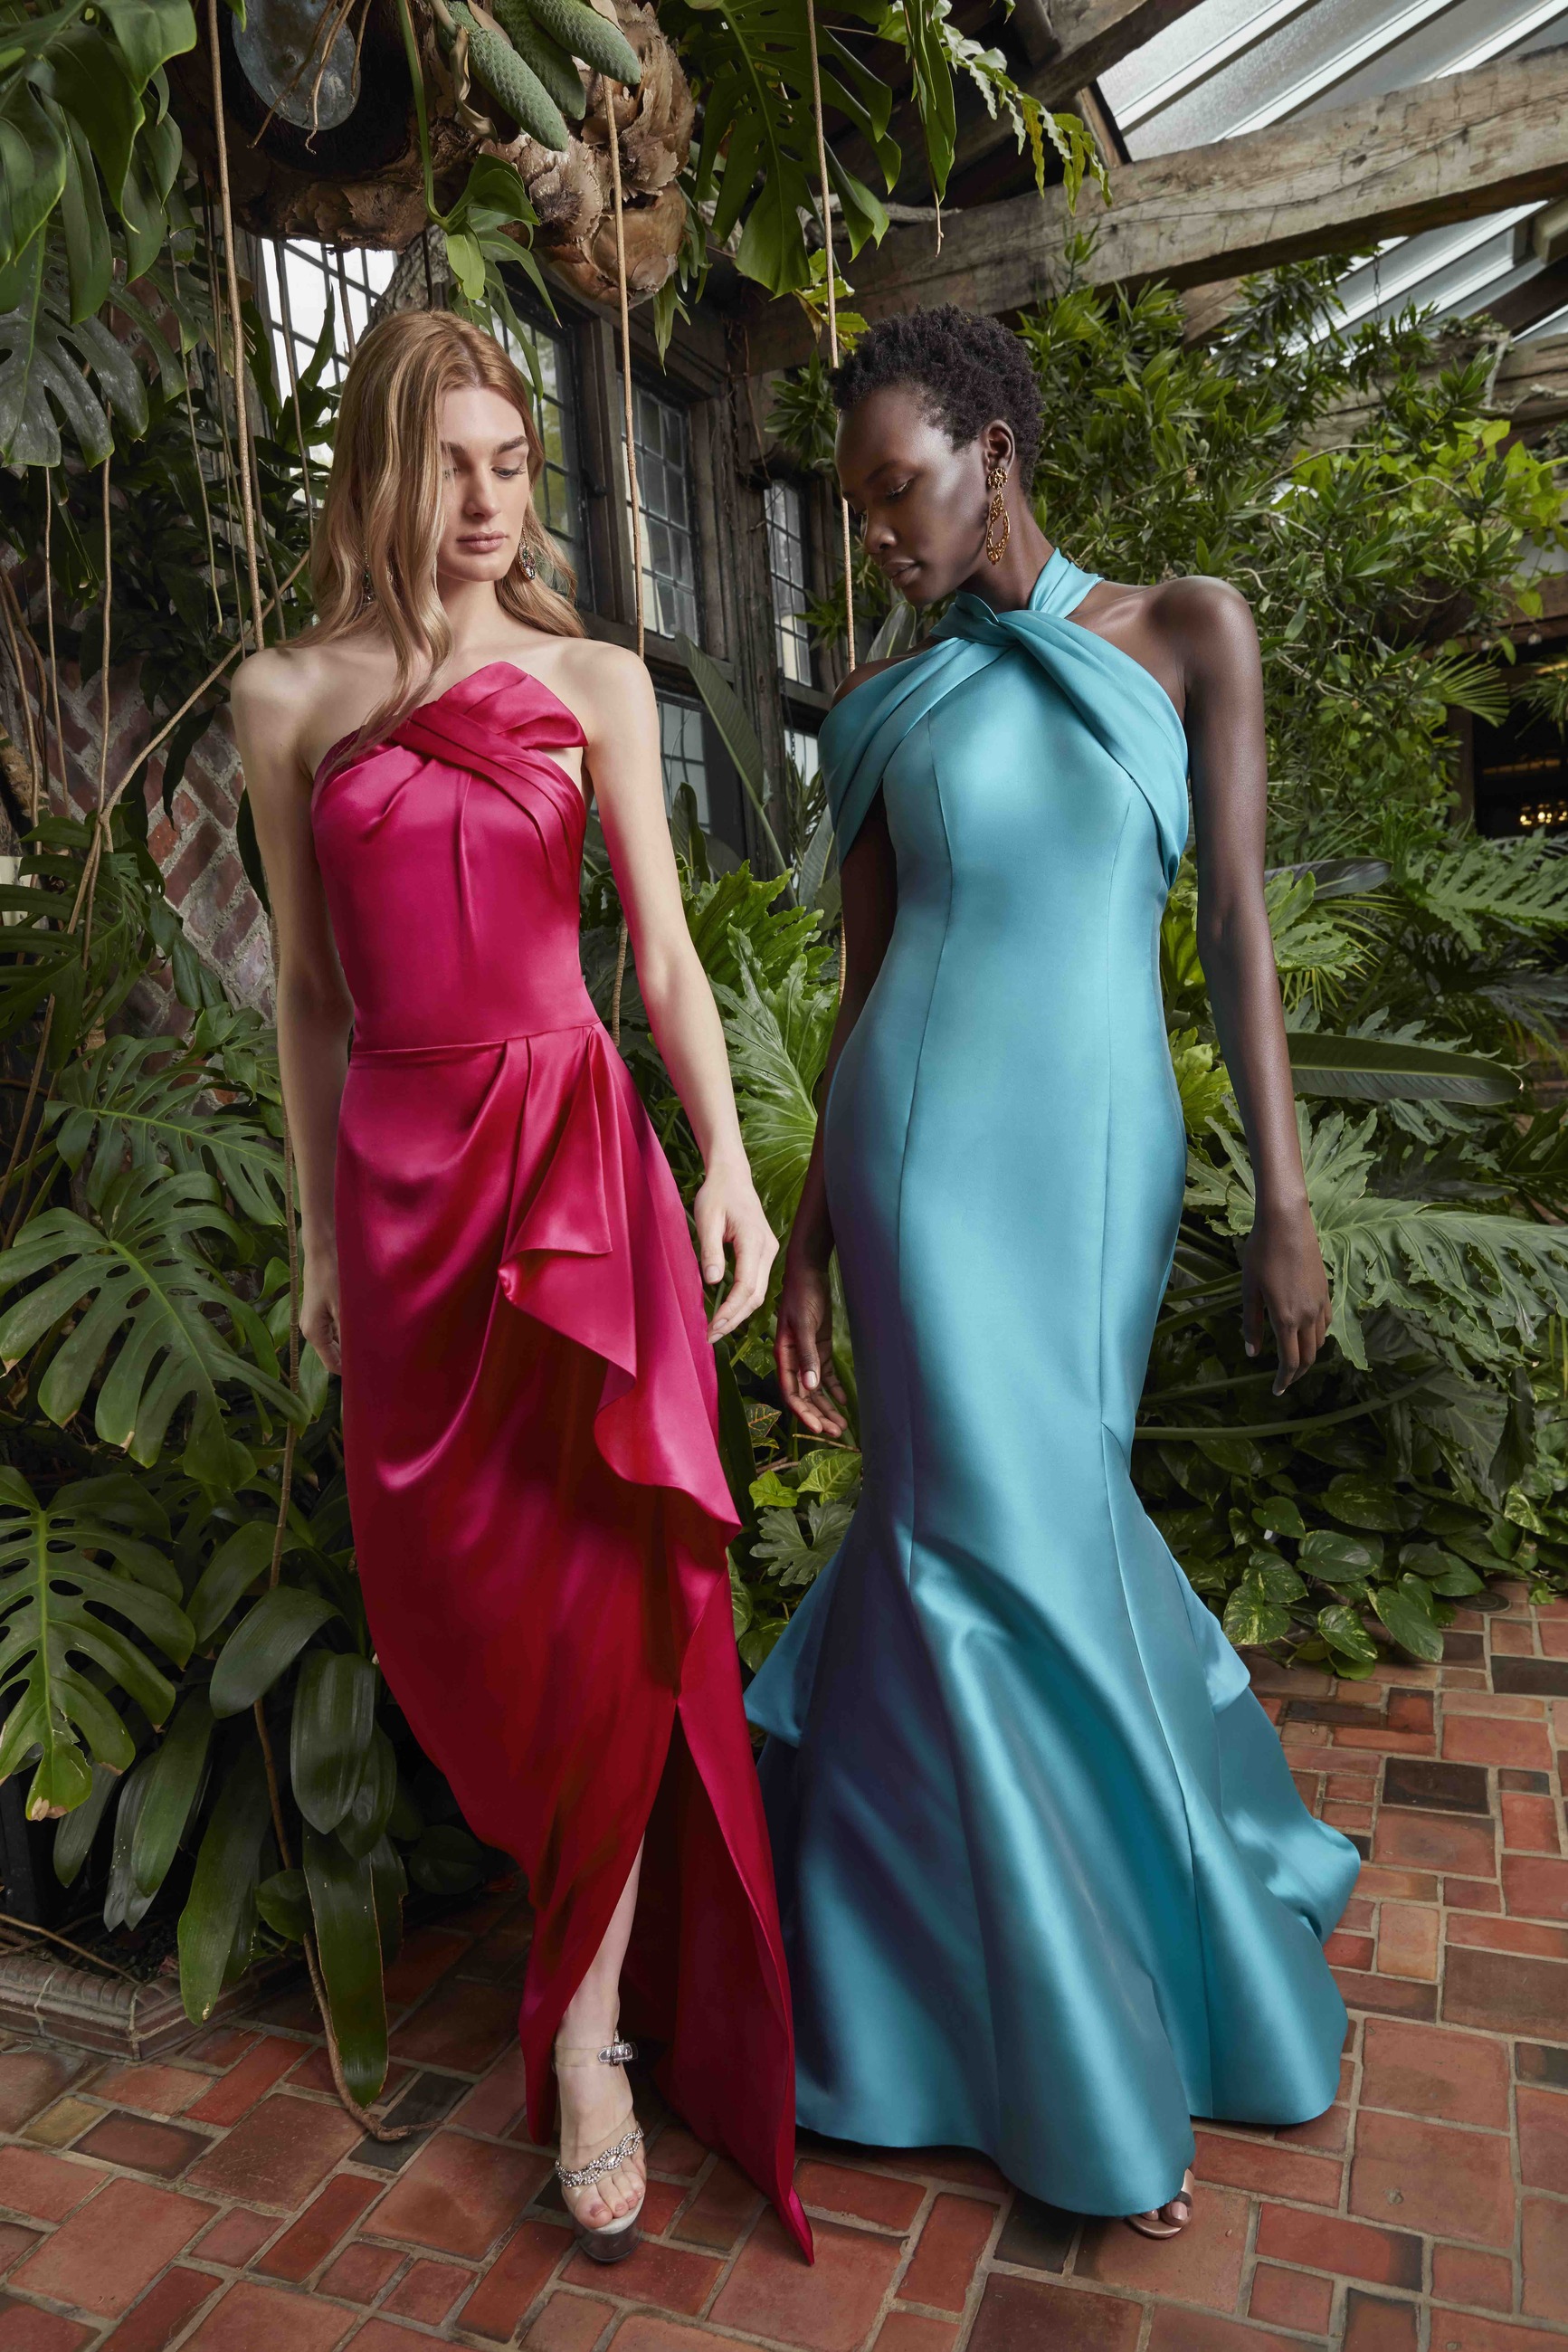 Models wearing evening dresses